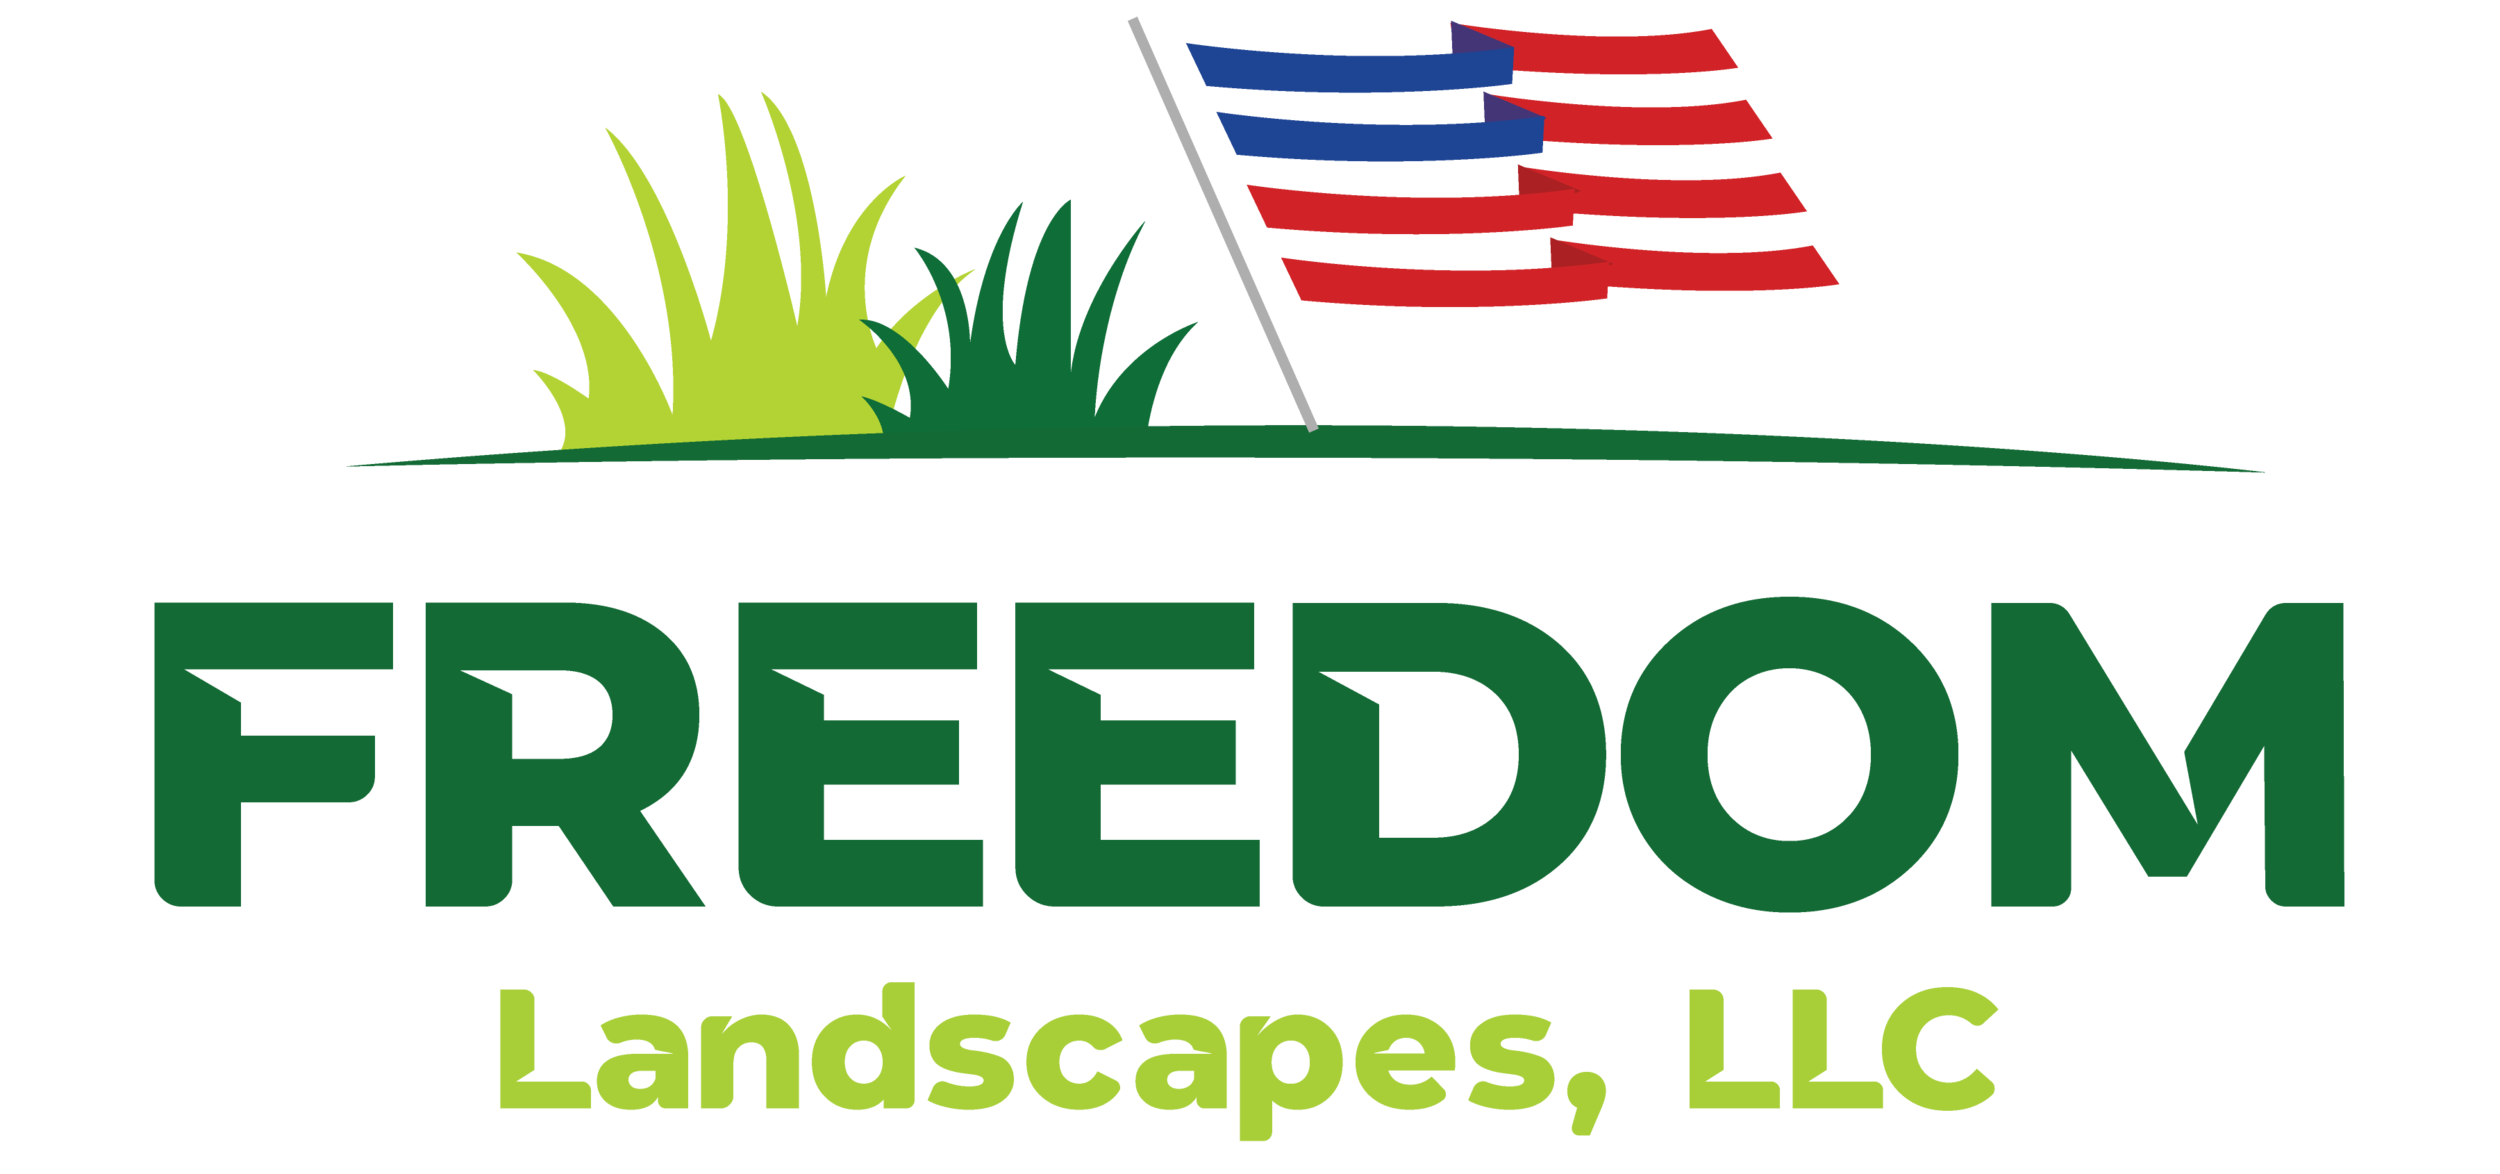 Freedom Landscapes, LLC